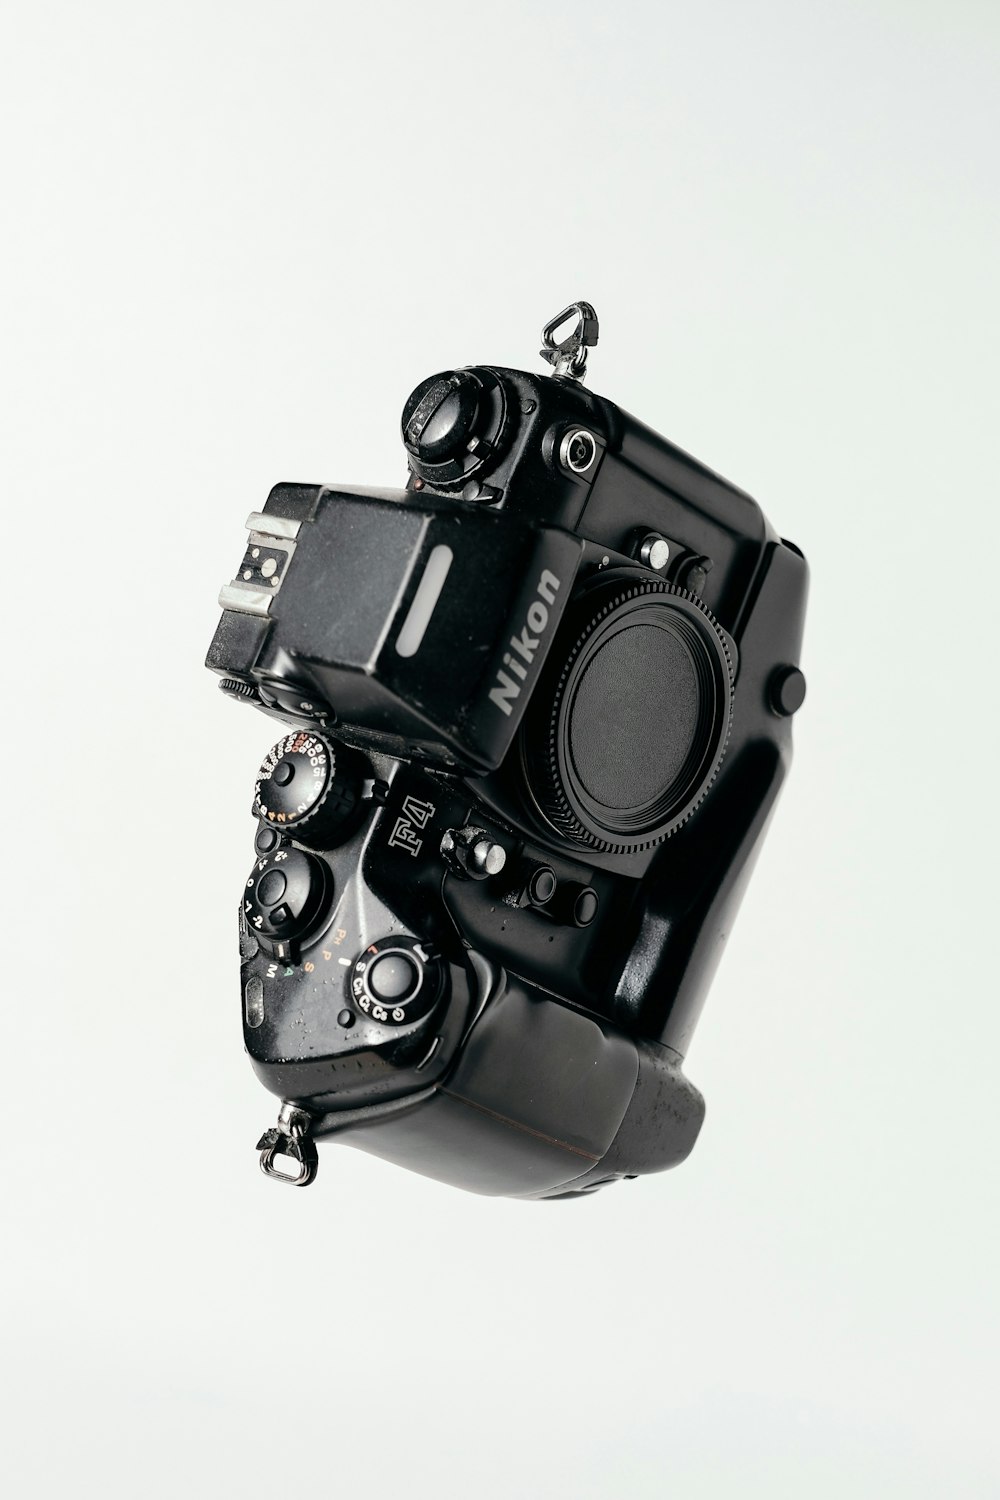 black Nikon DSLR camera on whit surface